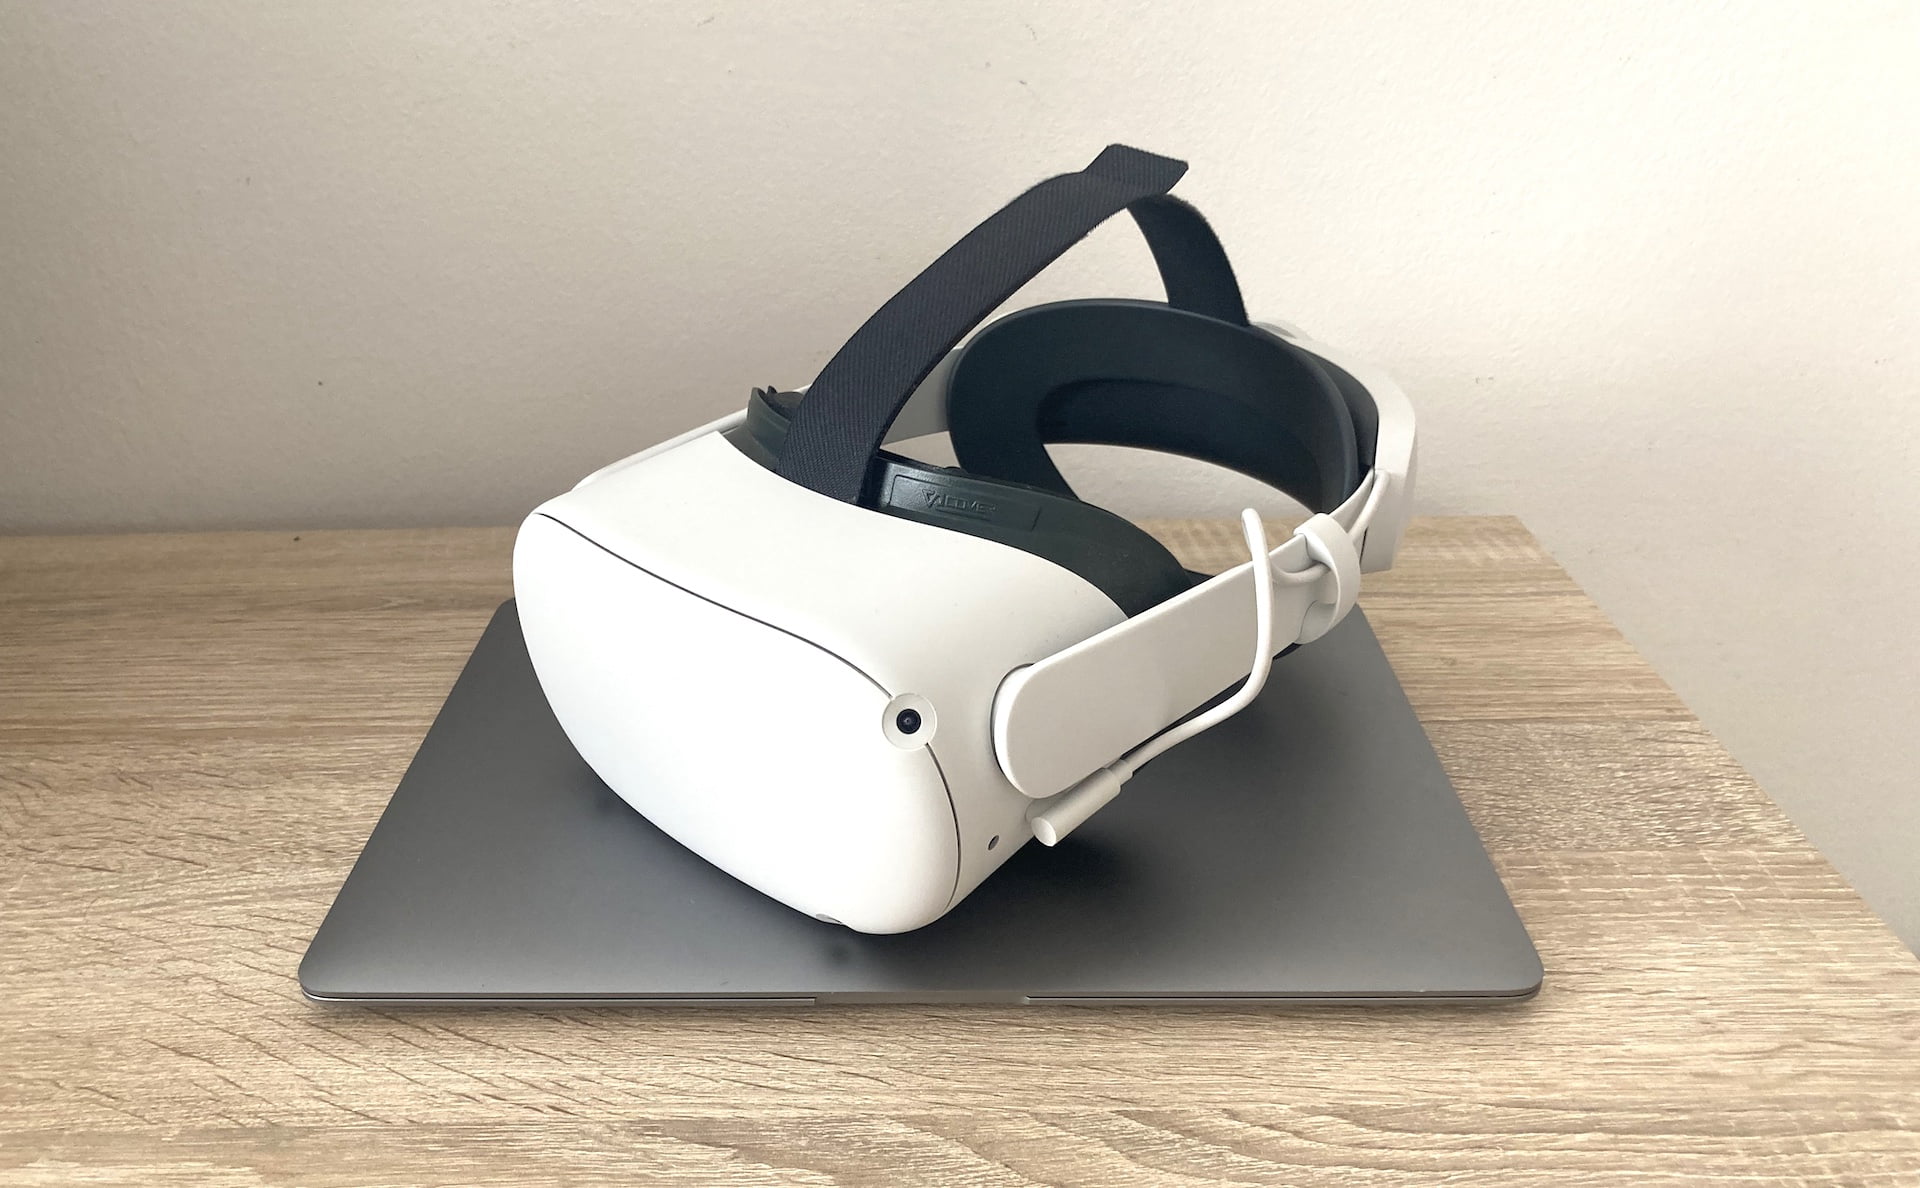 VR is in search of its raison d'être